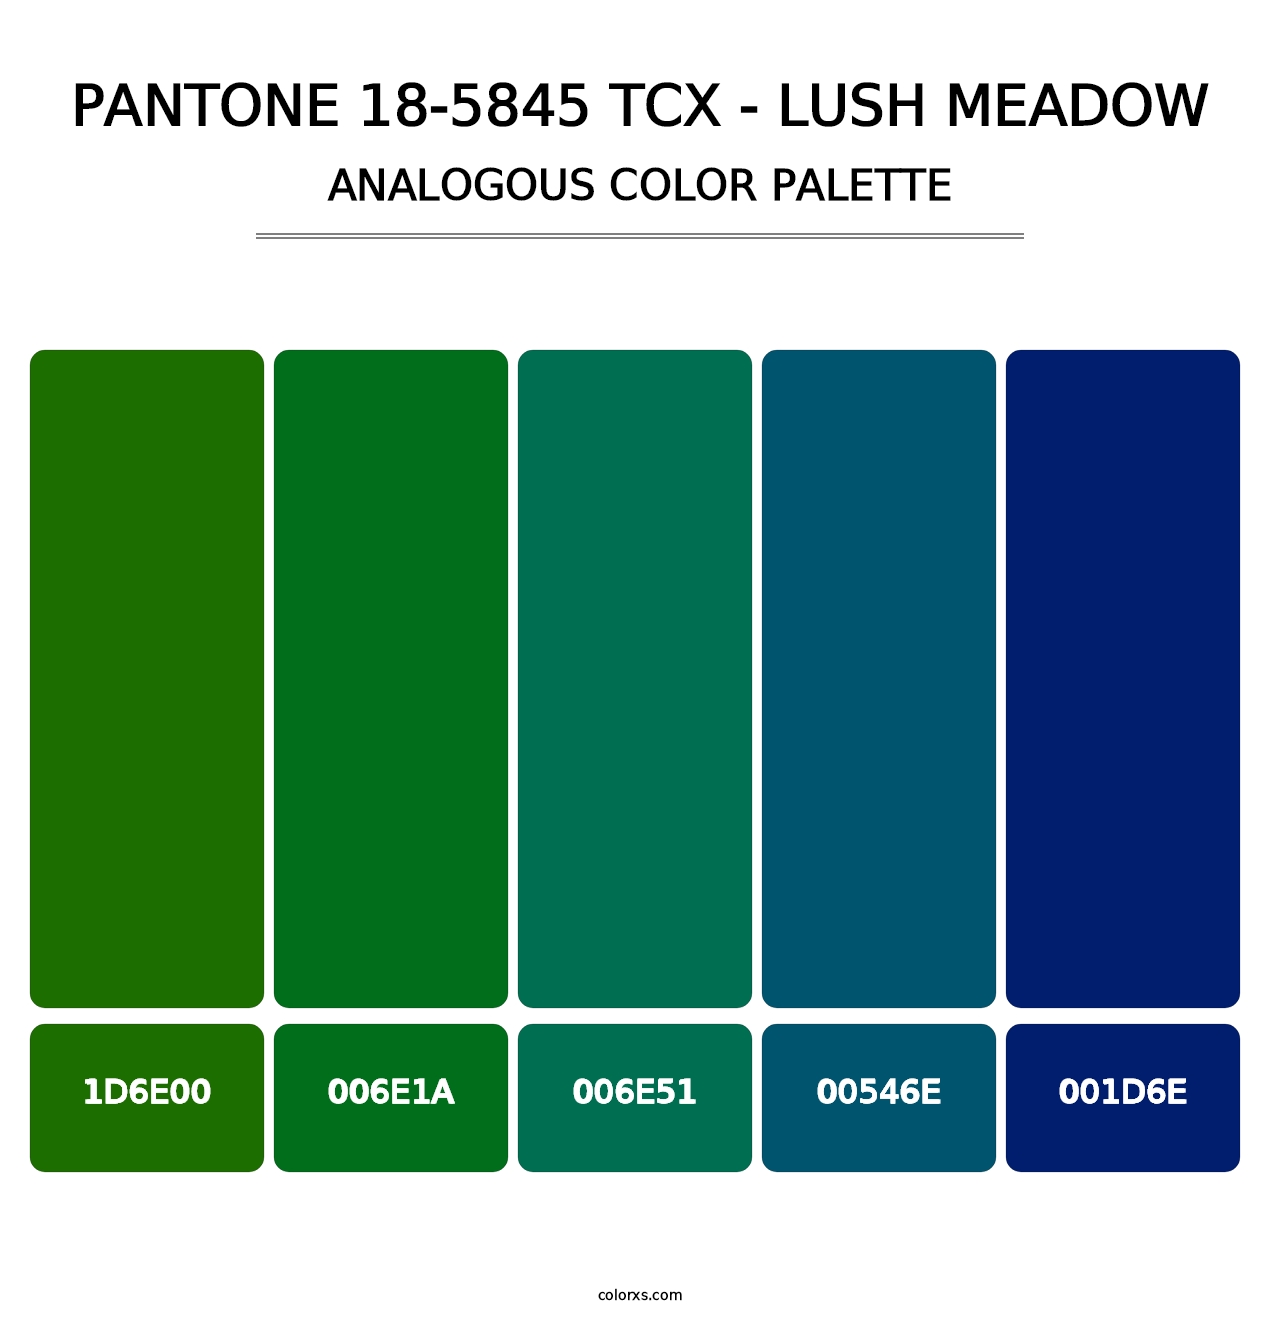 PANTONE 18-5845 TCX - Lush Meadow - Analogous Color Palette